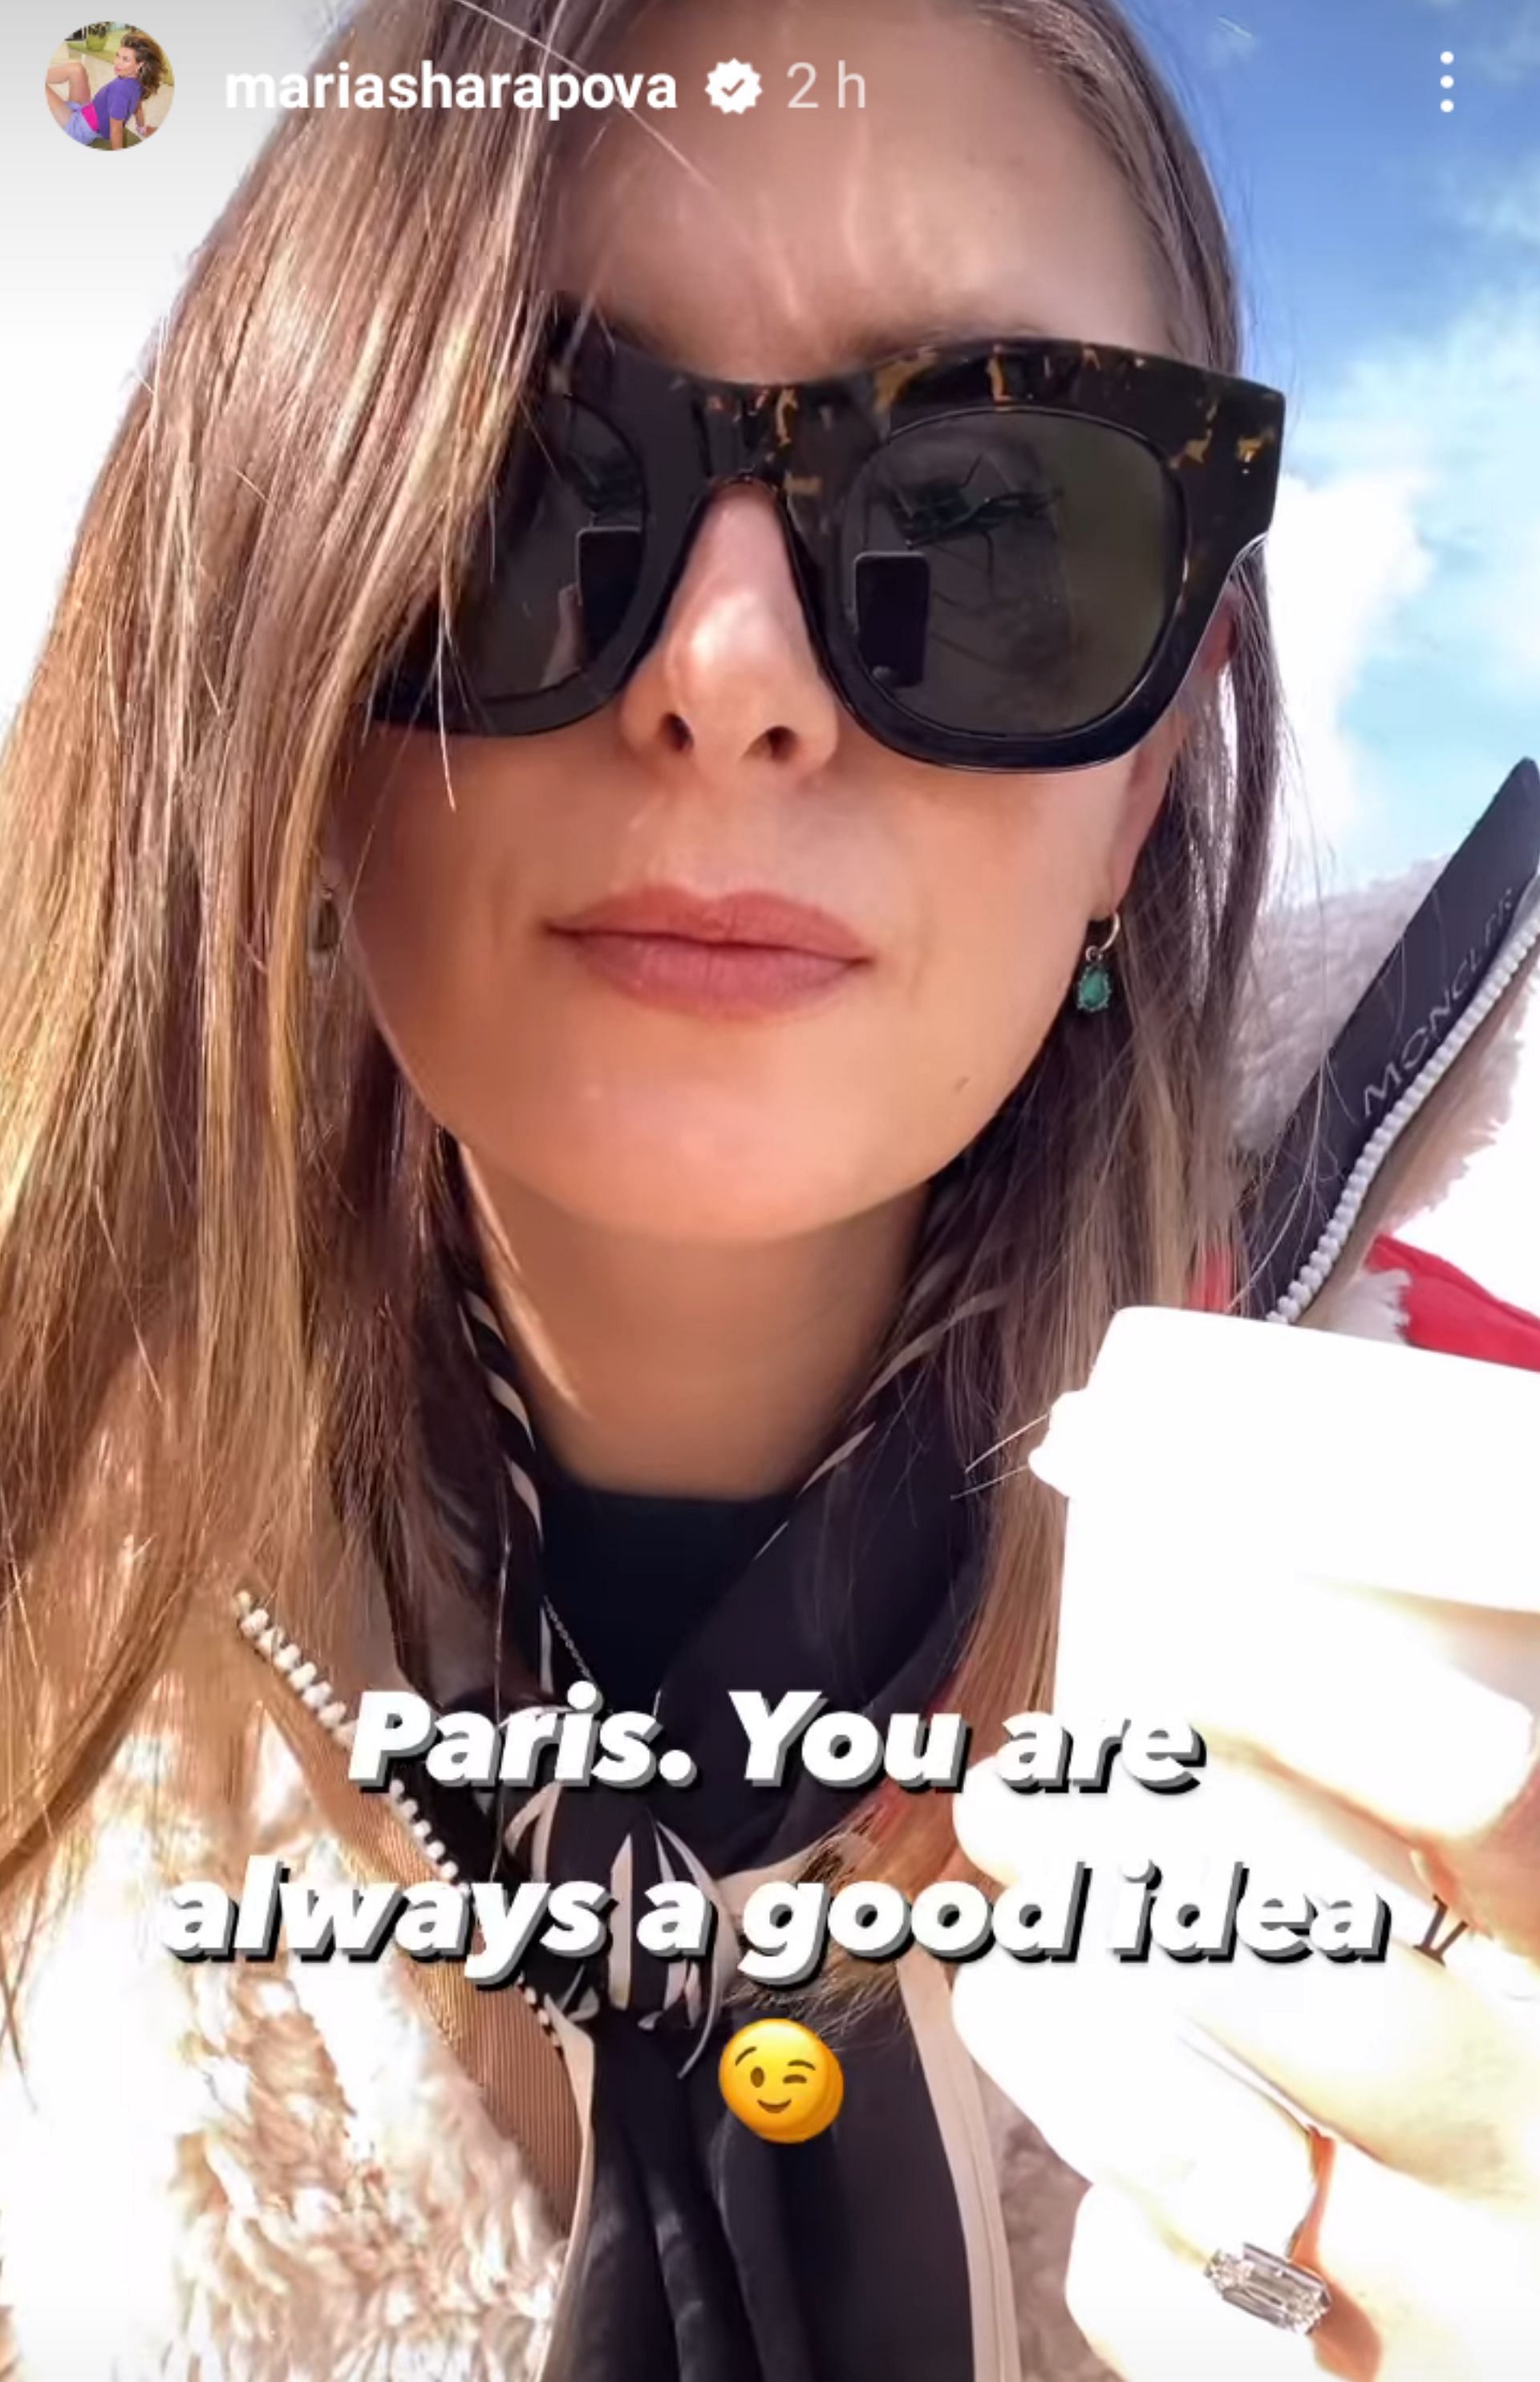 Sharapova posted on her Instagram stories